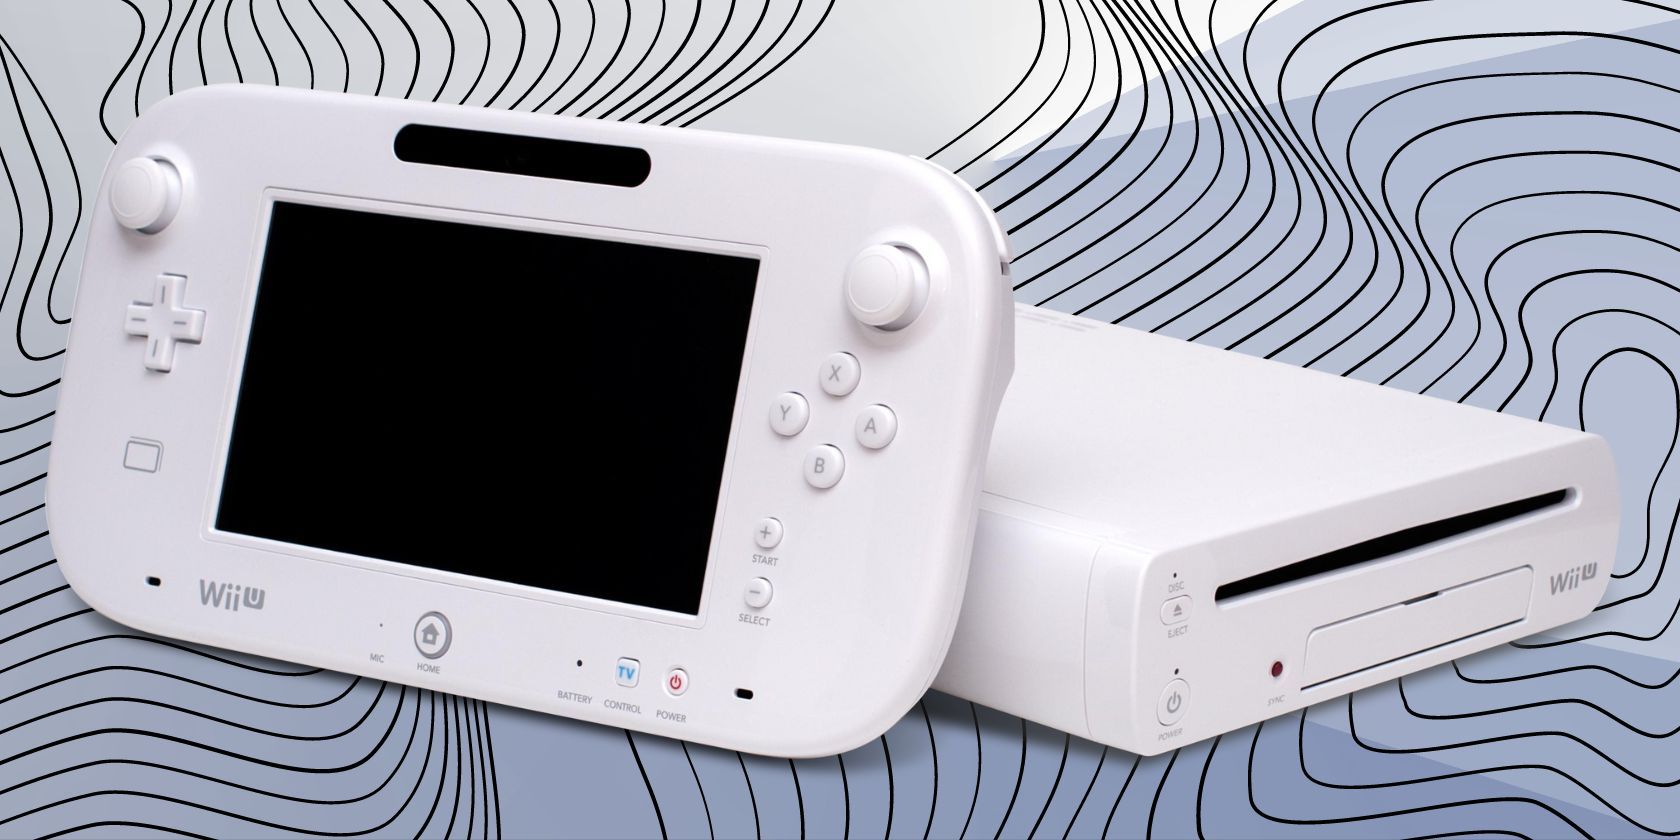 Close up of a white Nintendo Wii U